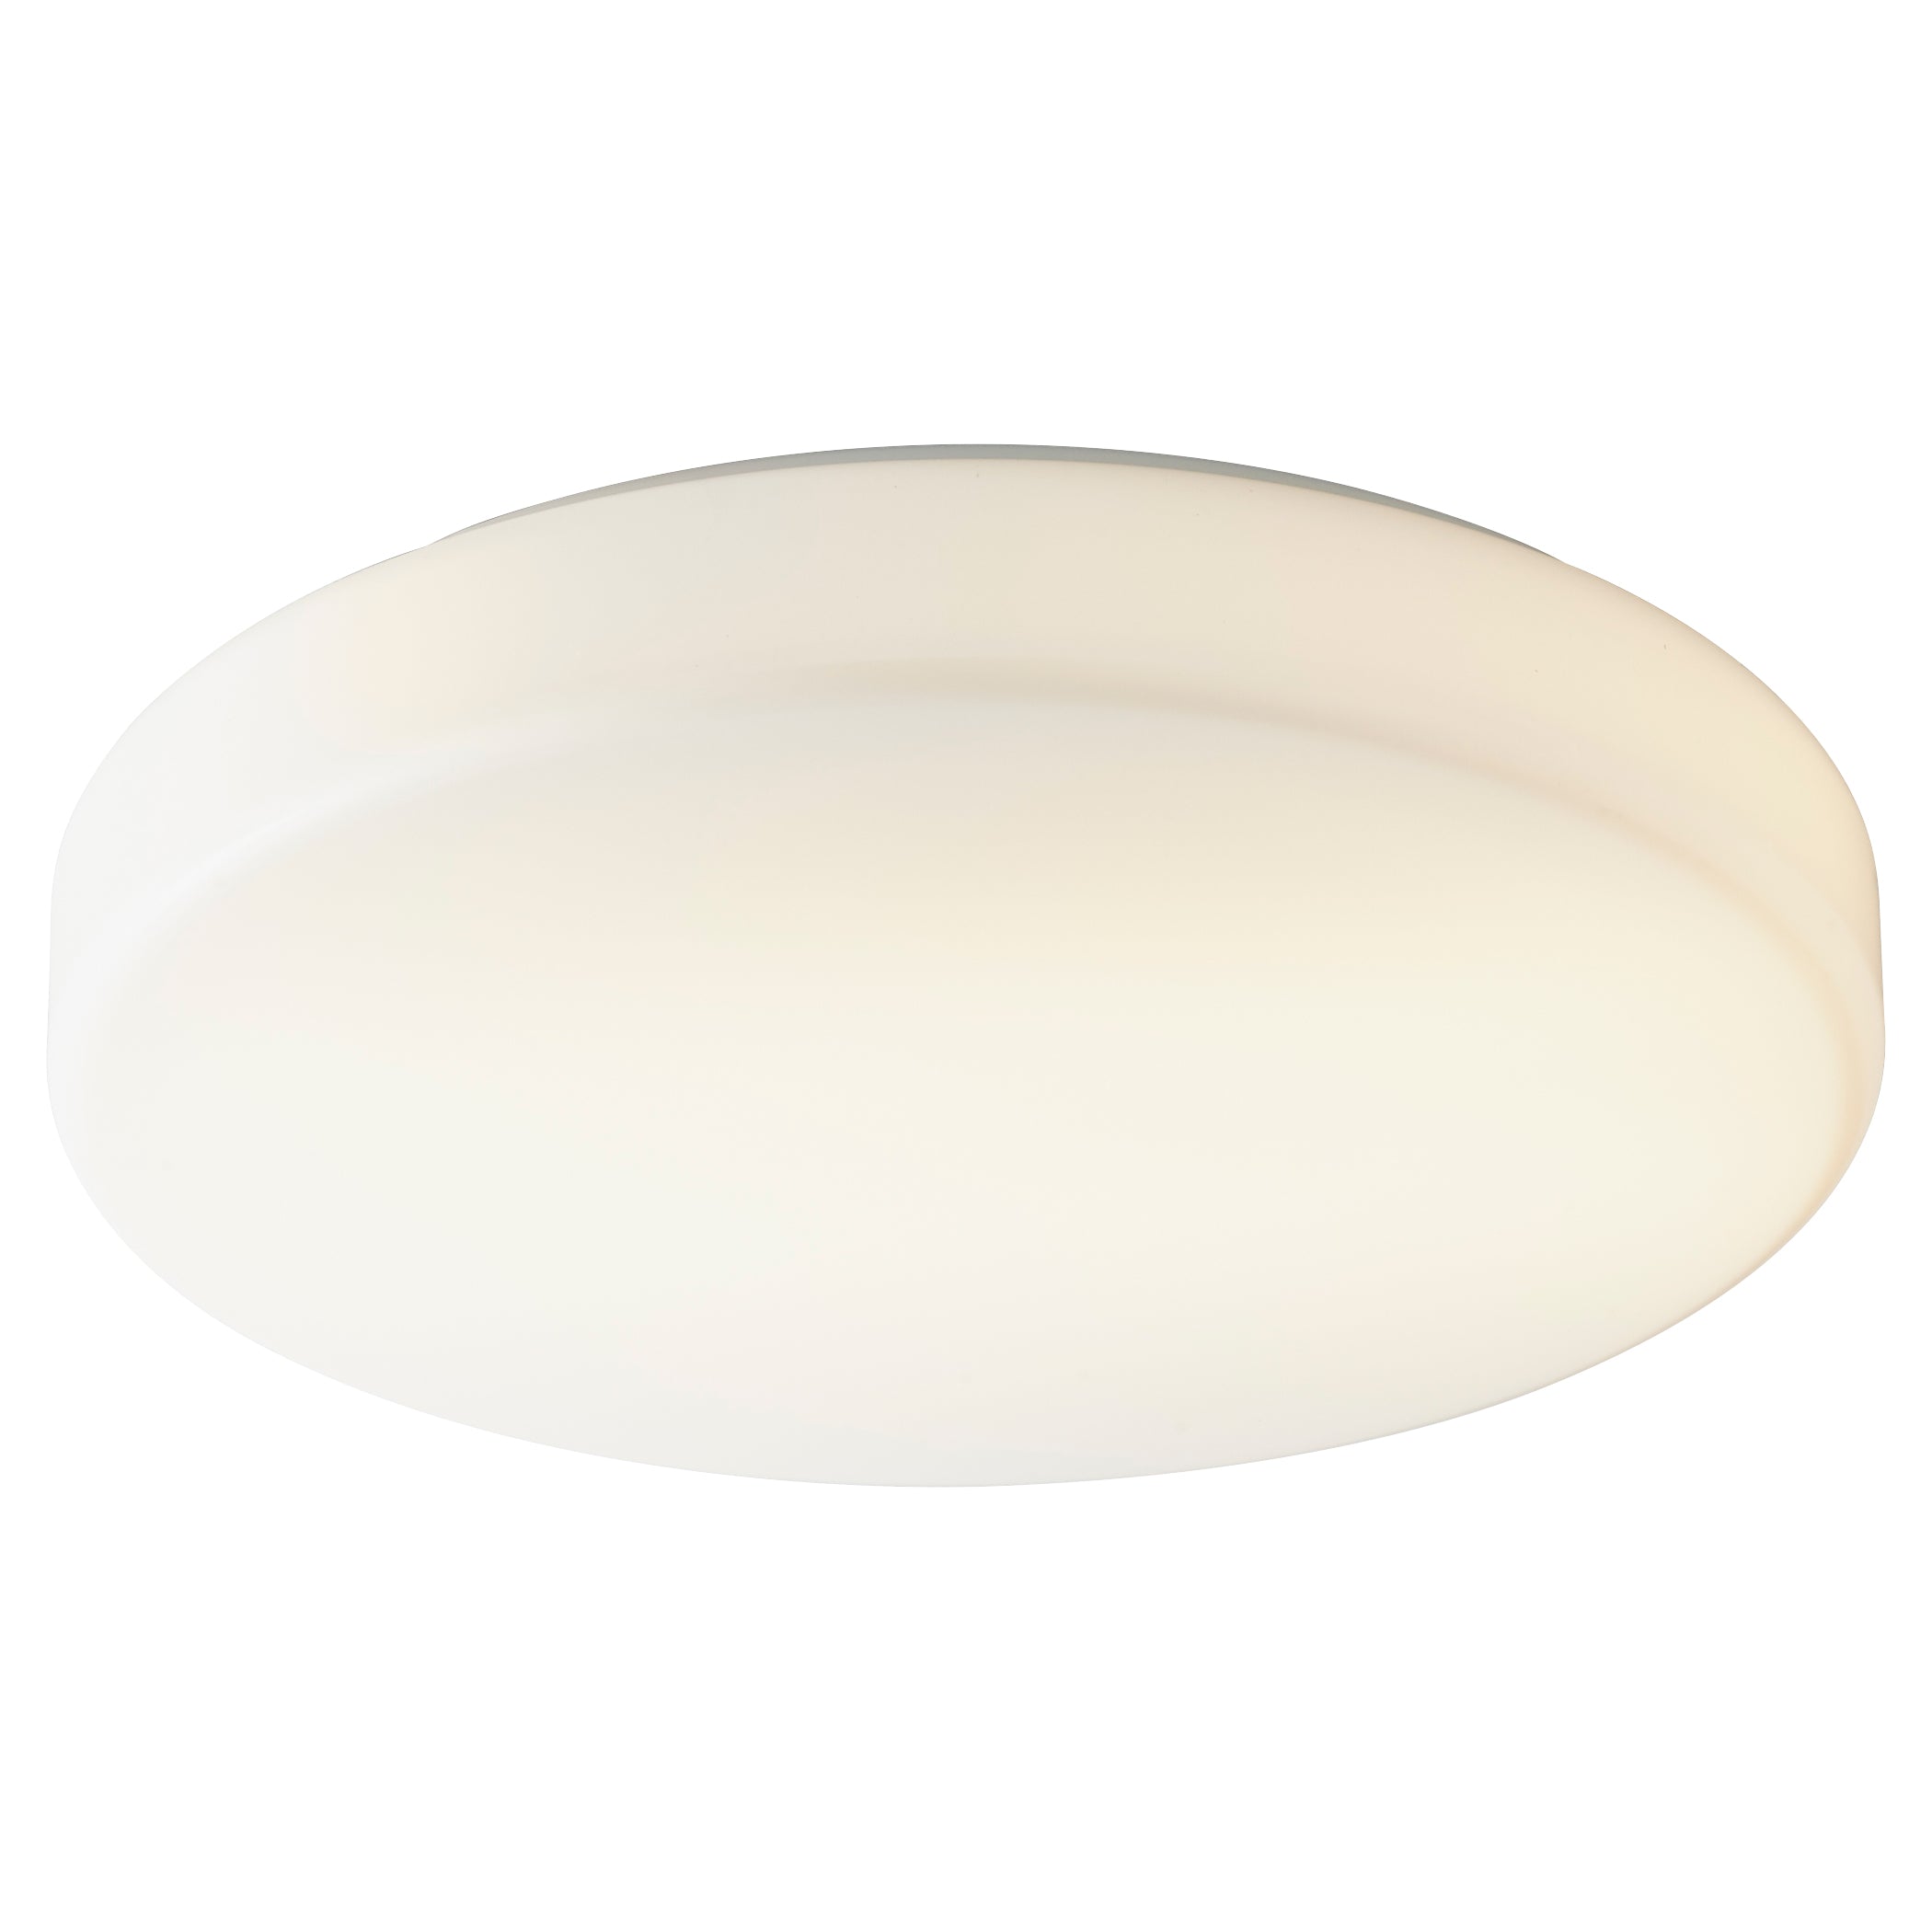 Oxygen Rhythm 3-649-6 Flush Round LED Ceiling Mount Light Fixture - White